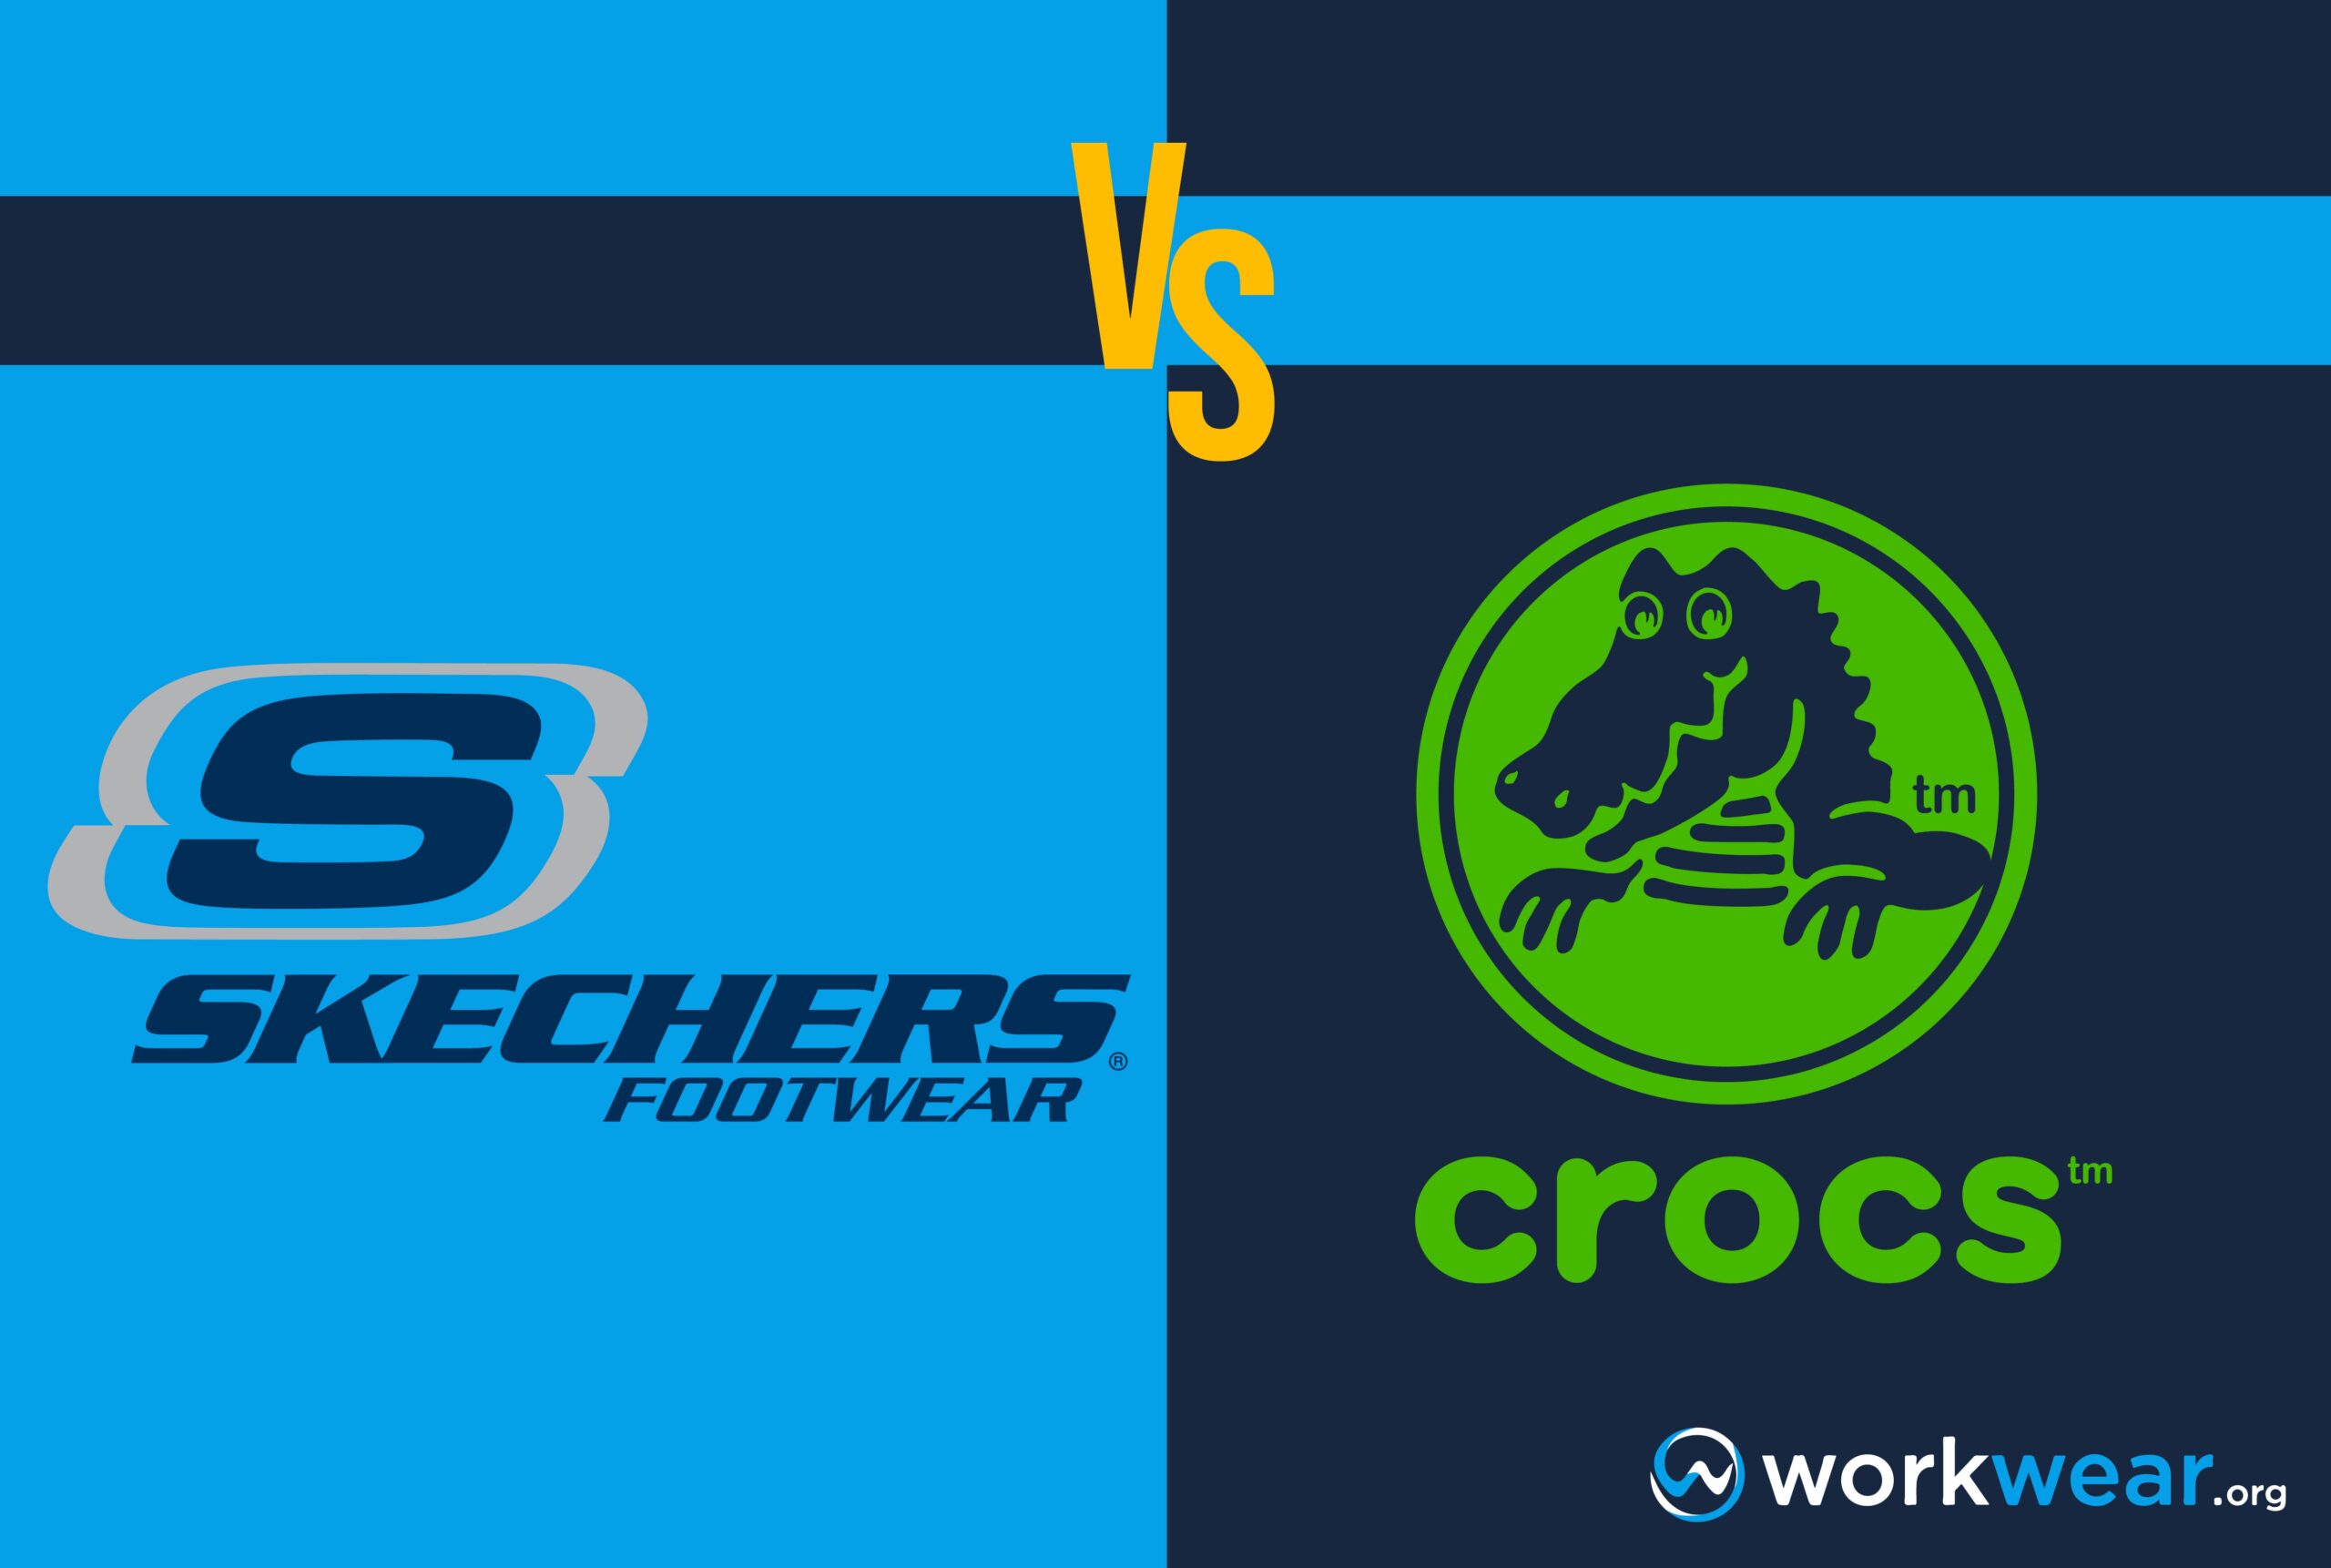 Crocs vs Skechers - Which one wins the comfortable work footwear | WorkWear.org